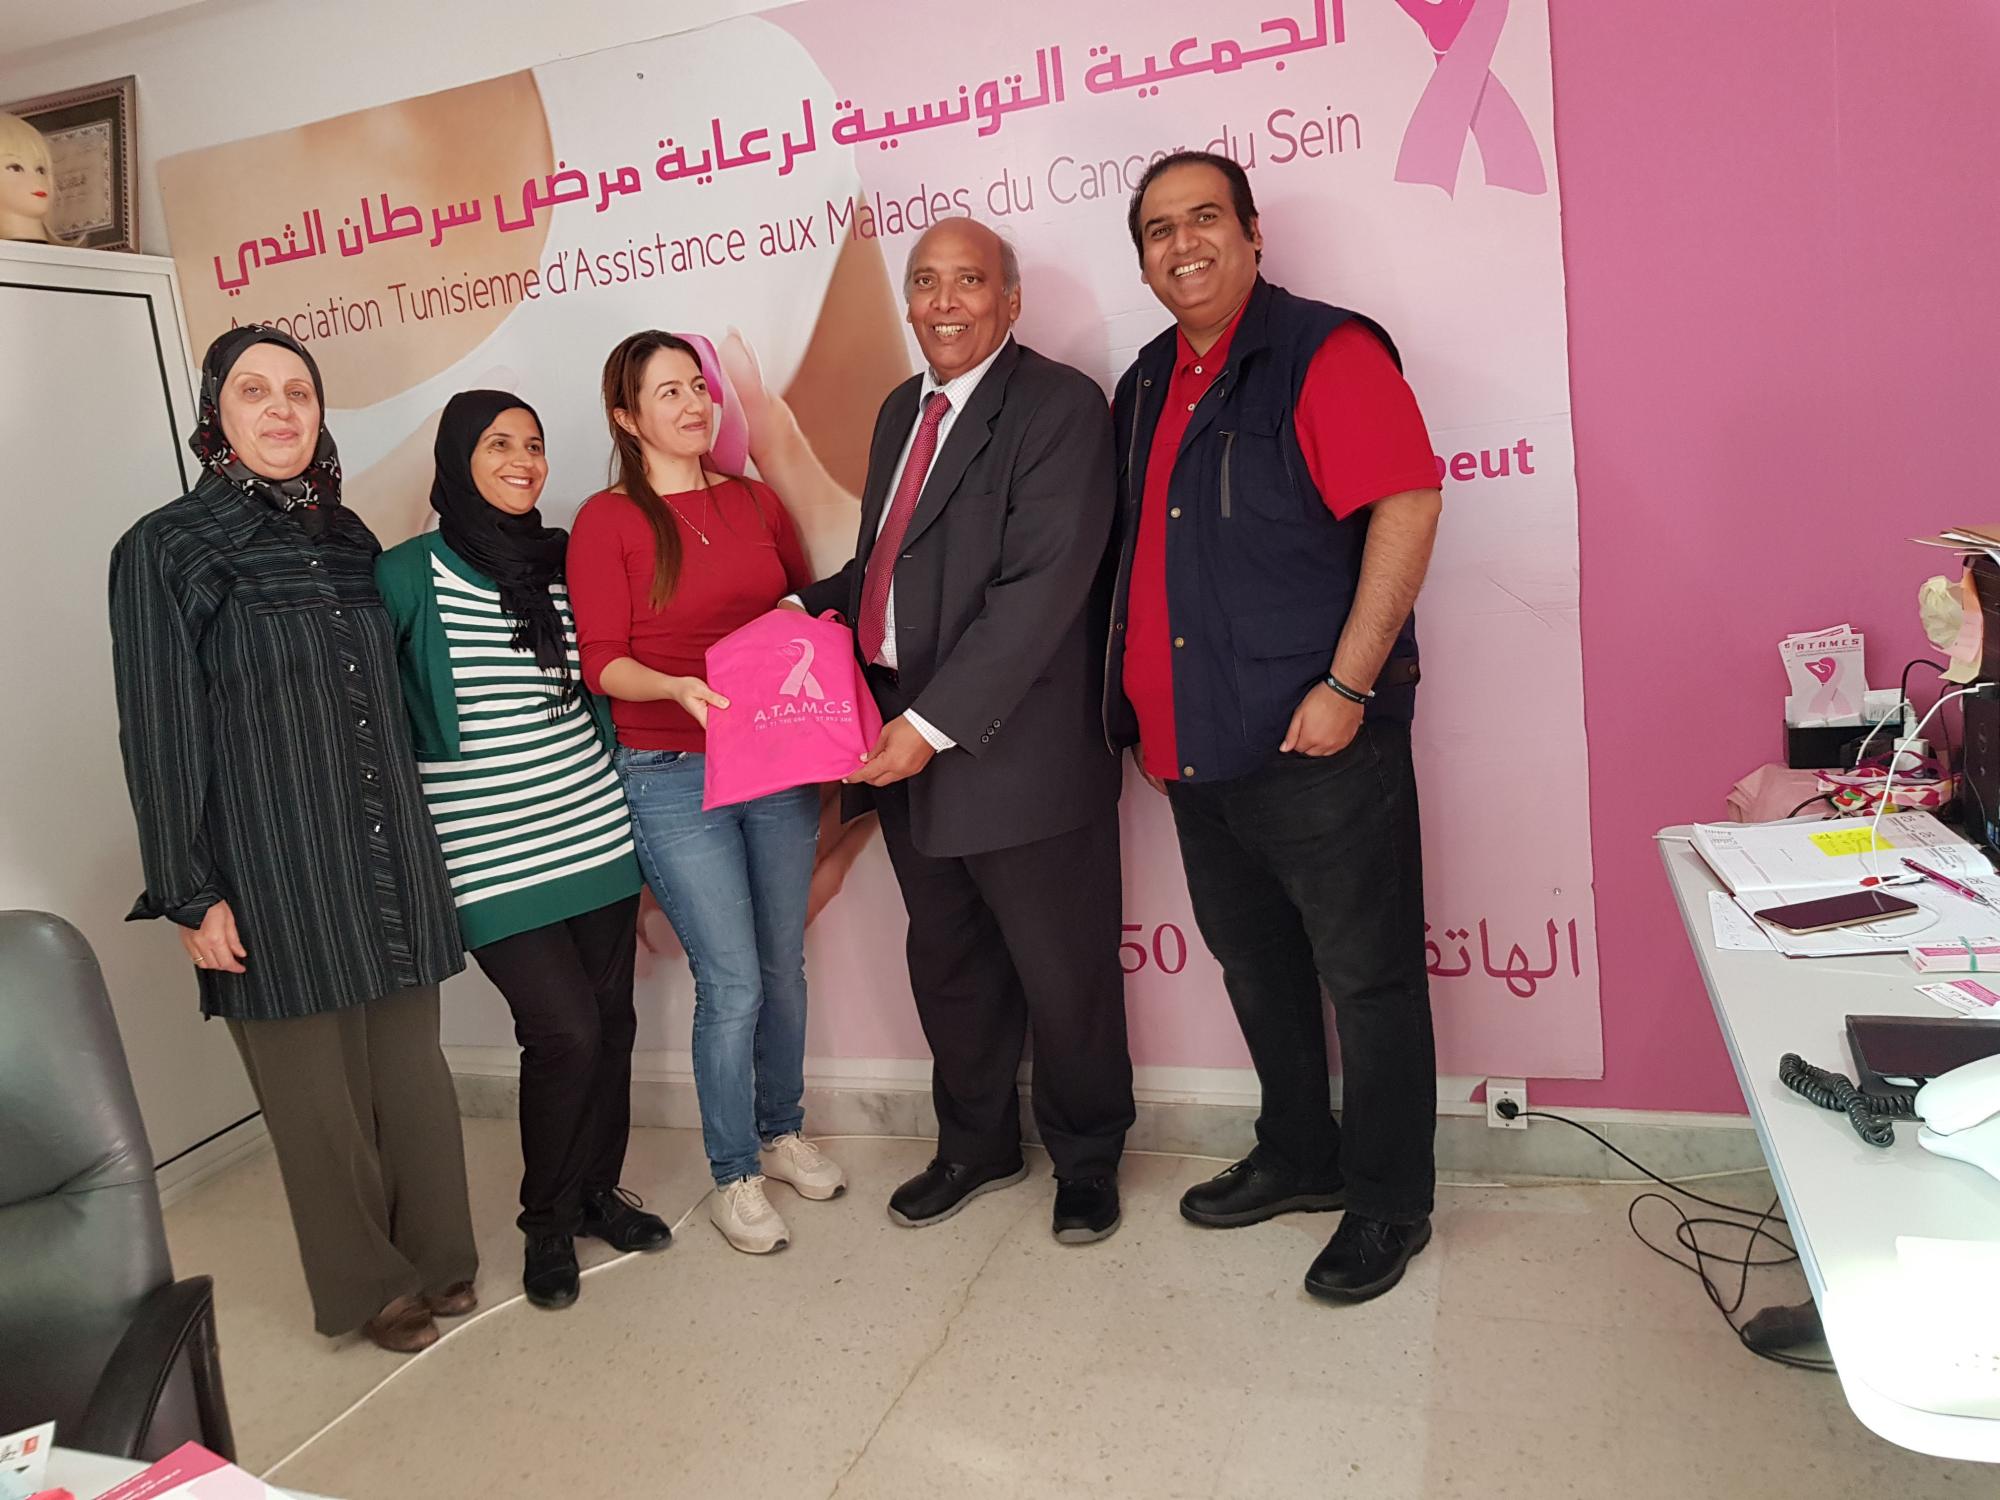 Ahmed Nizami Breast cancer Association Tunisia